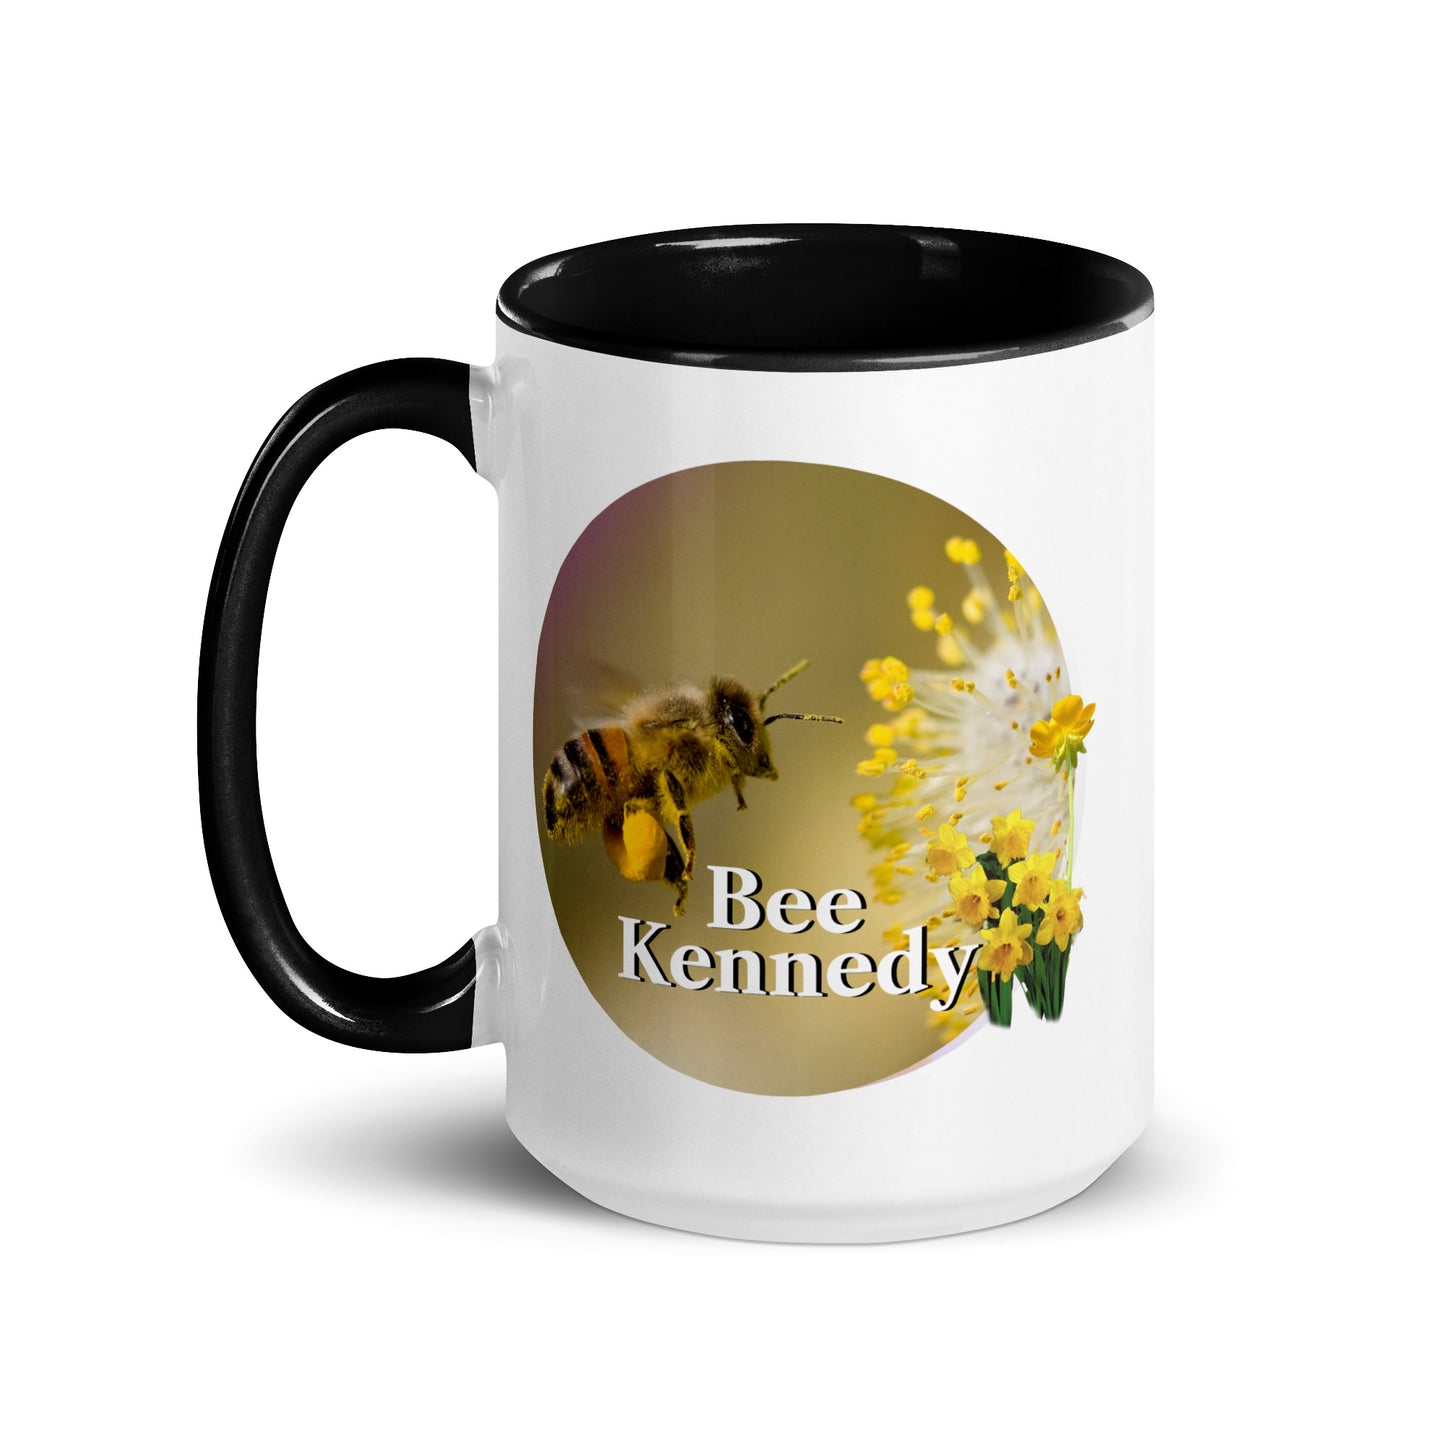 Bees for Kennedy Mug